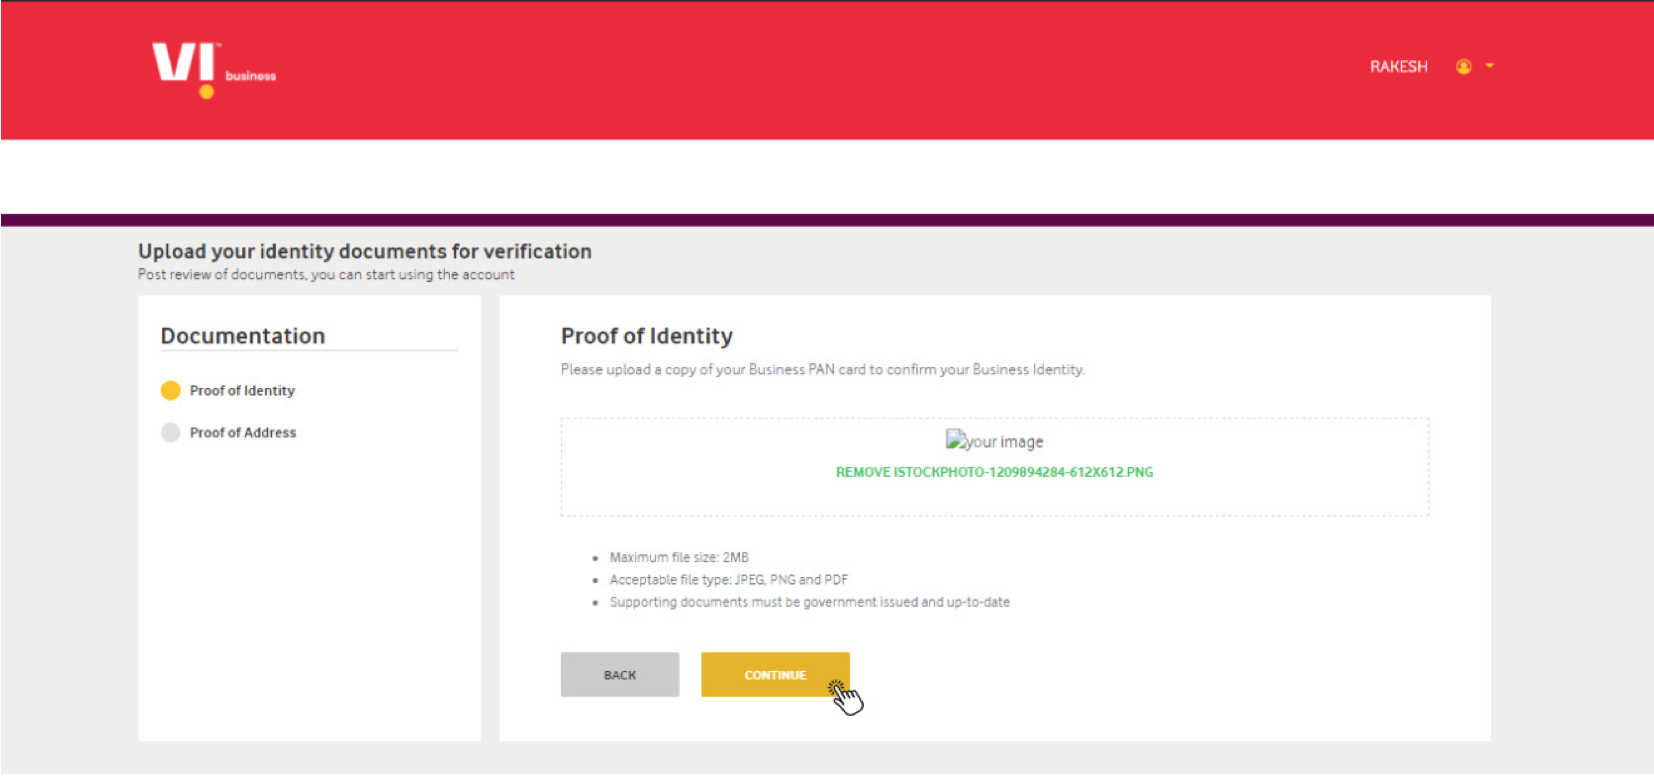 Proof of Identity upload on Vodafone DLT portal